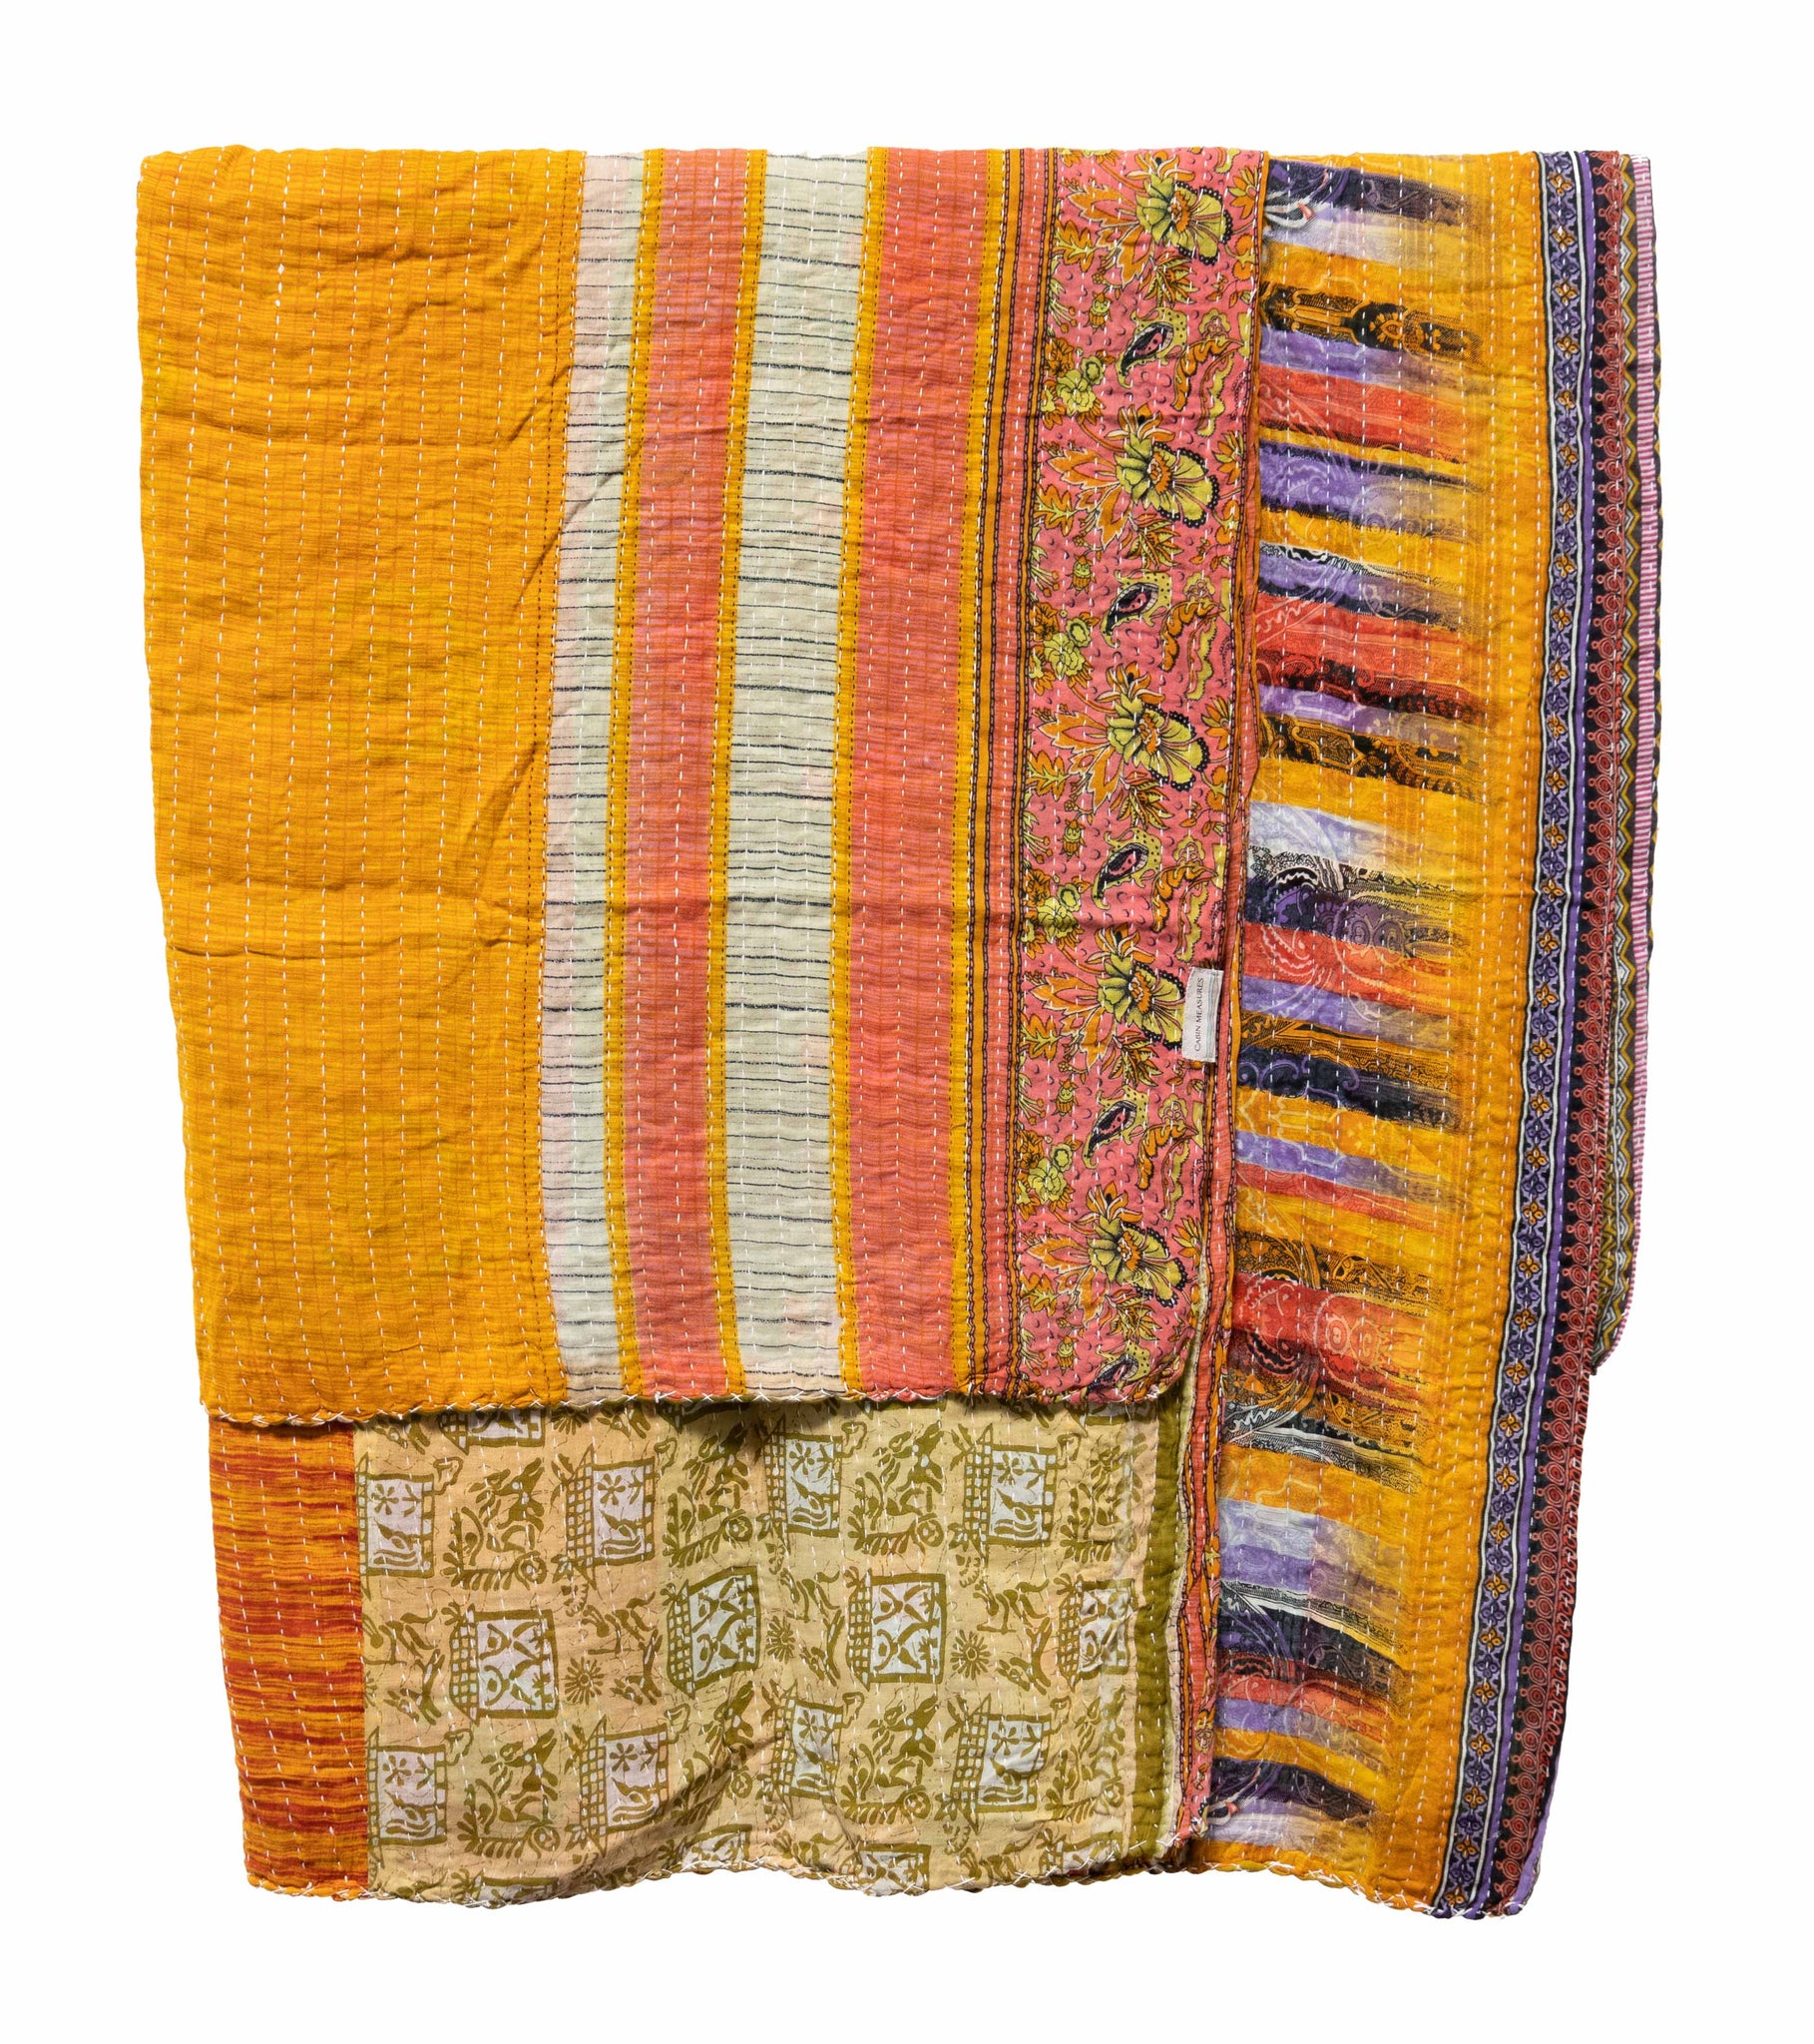 Vintage Cotton Kantha Blanket in Tree of Life